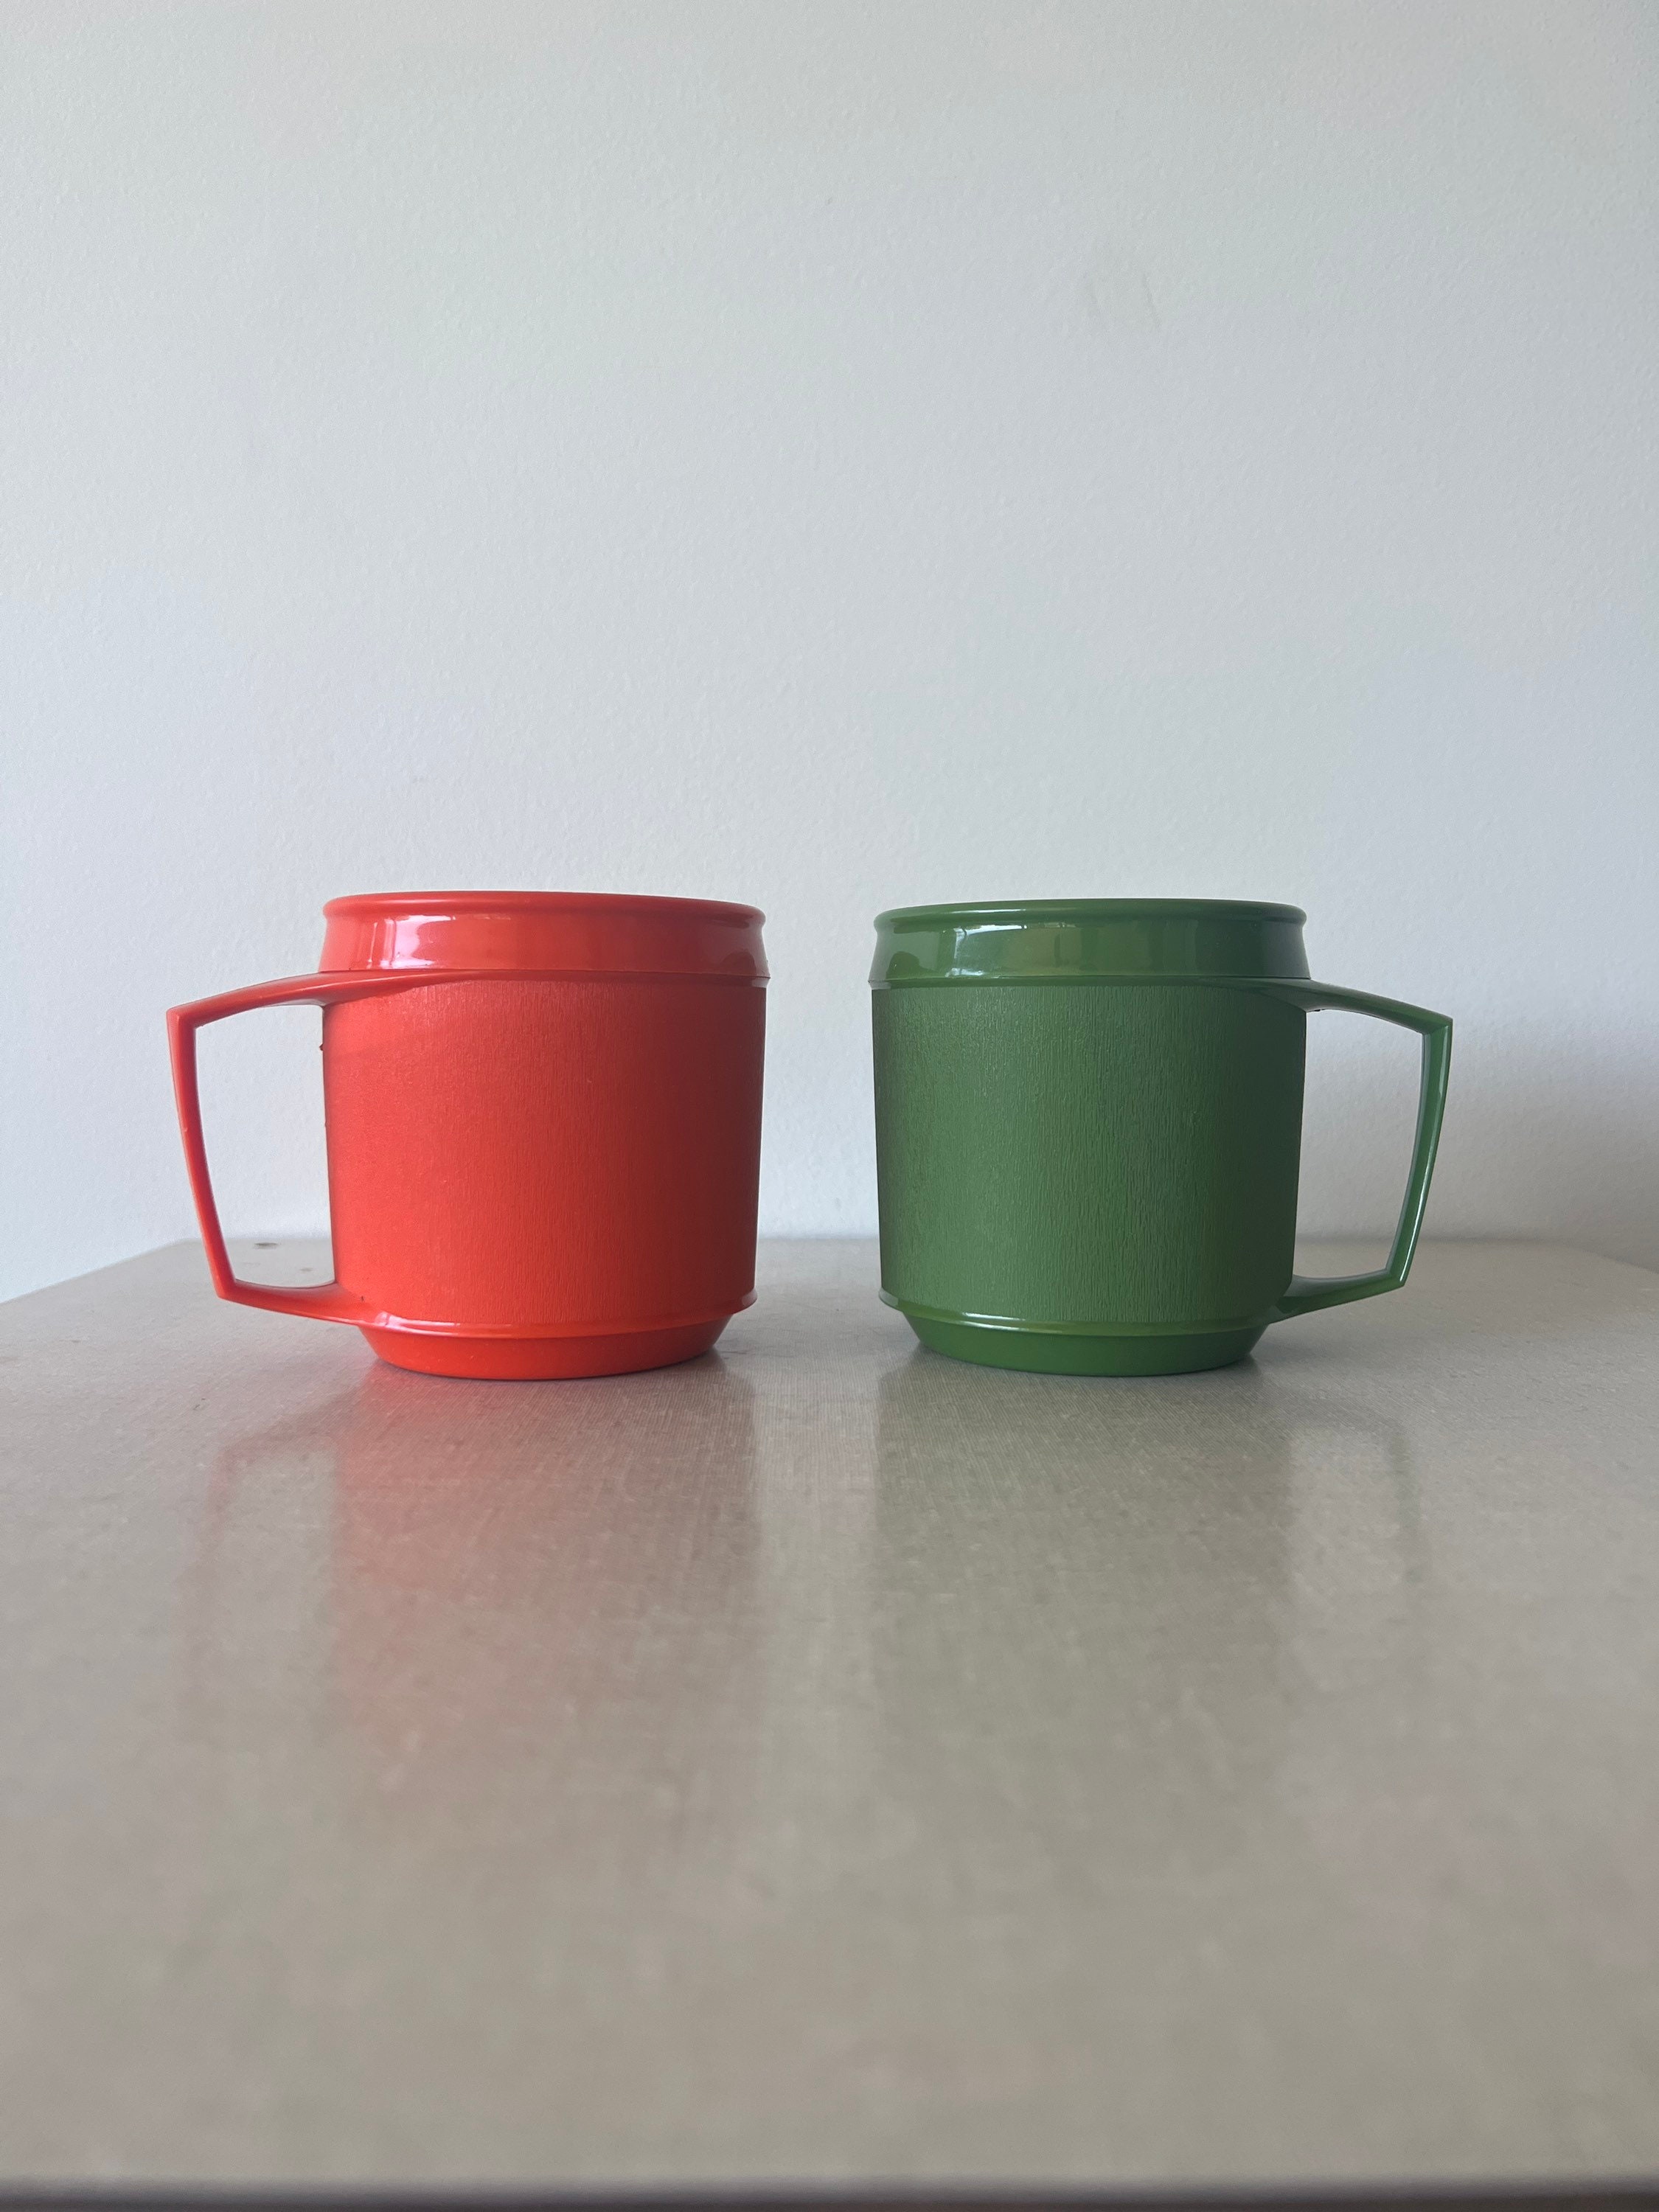 Aladdin Mason Jar 16 oz Plastic Coffee Mason Tumbler Mug Cup Lid Straw